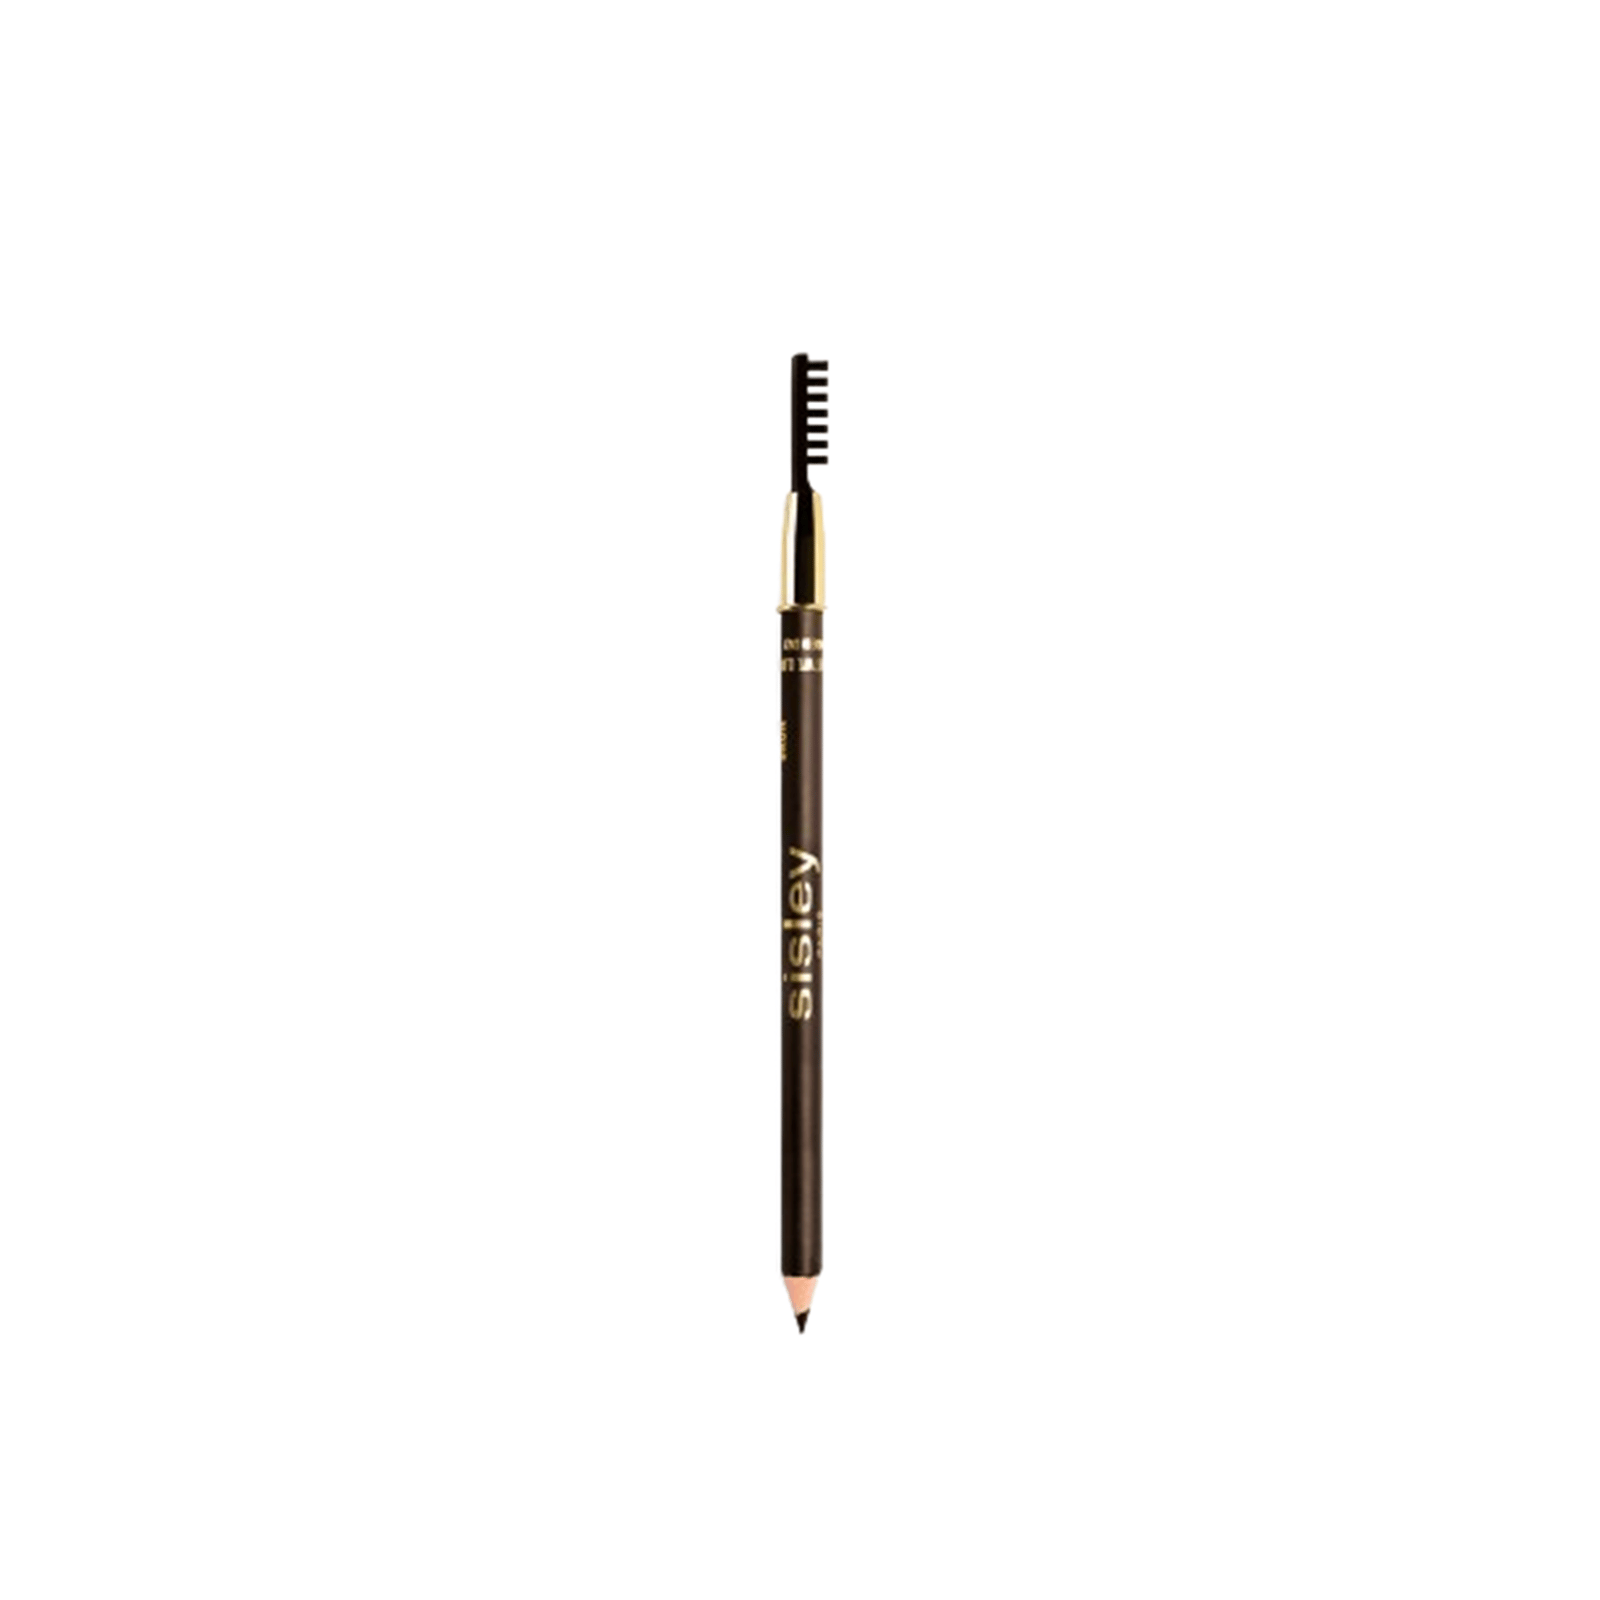 Sisley Paris Phyto Sourcils Perfect Eyeliner Pencil 3 Brun 0.55g (0.019 oz)